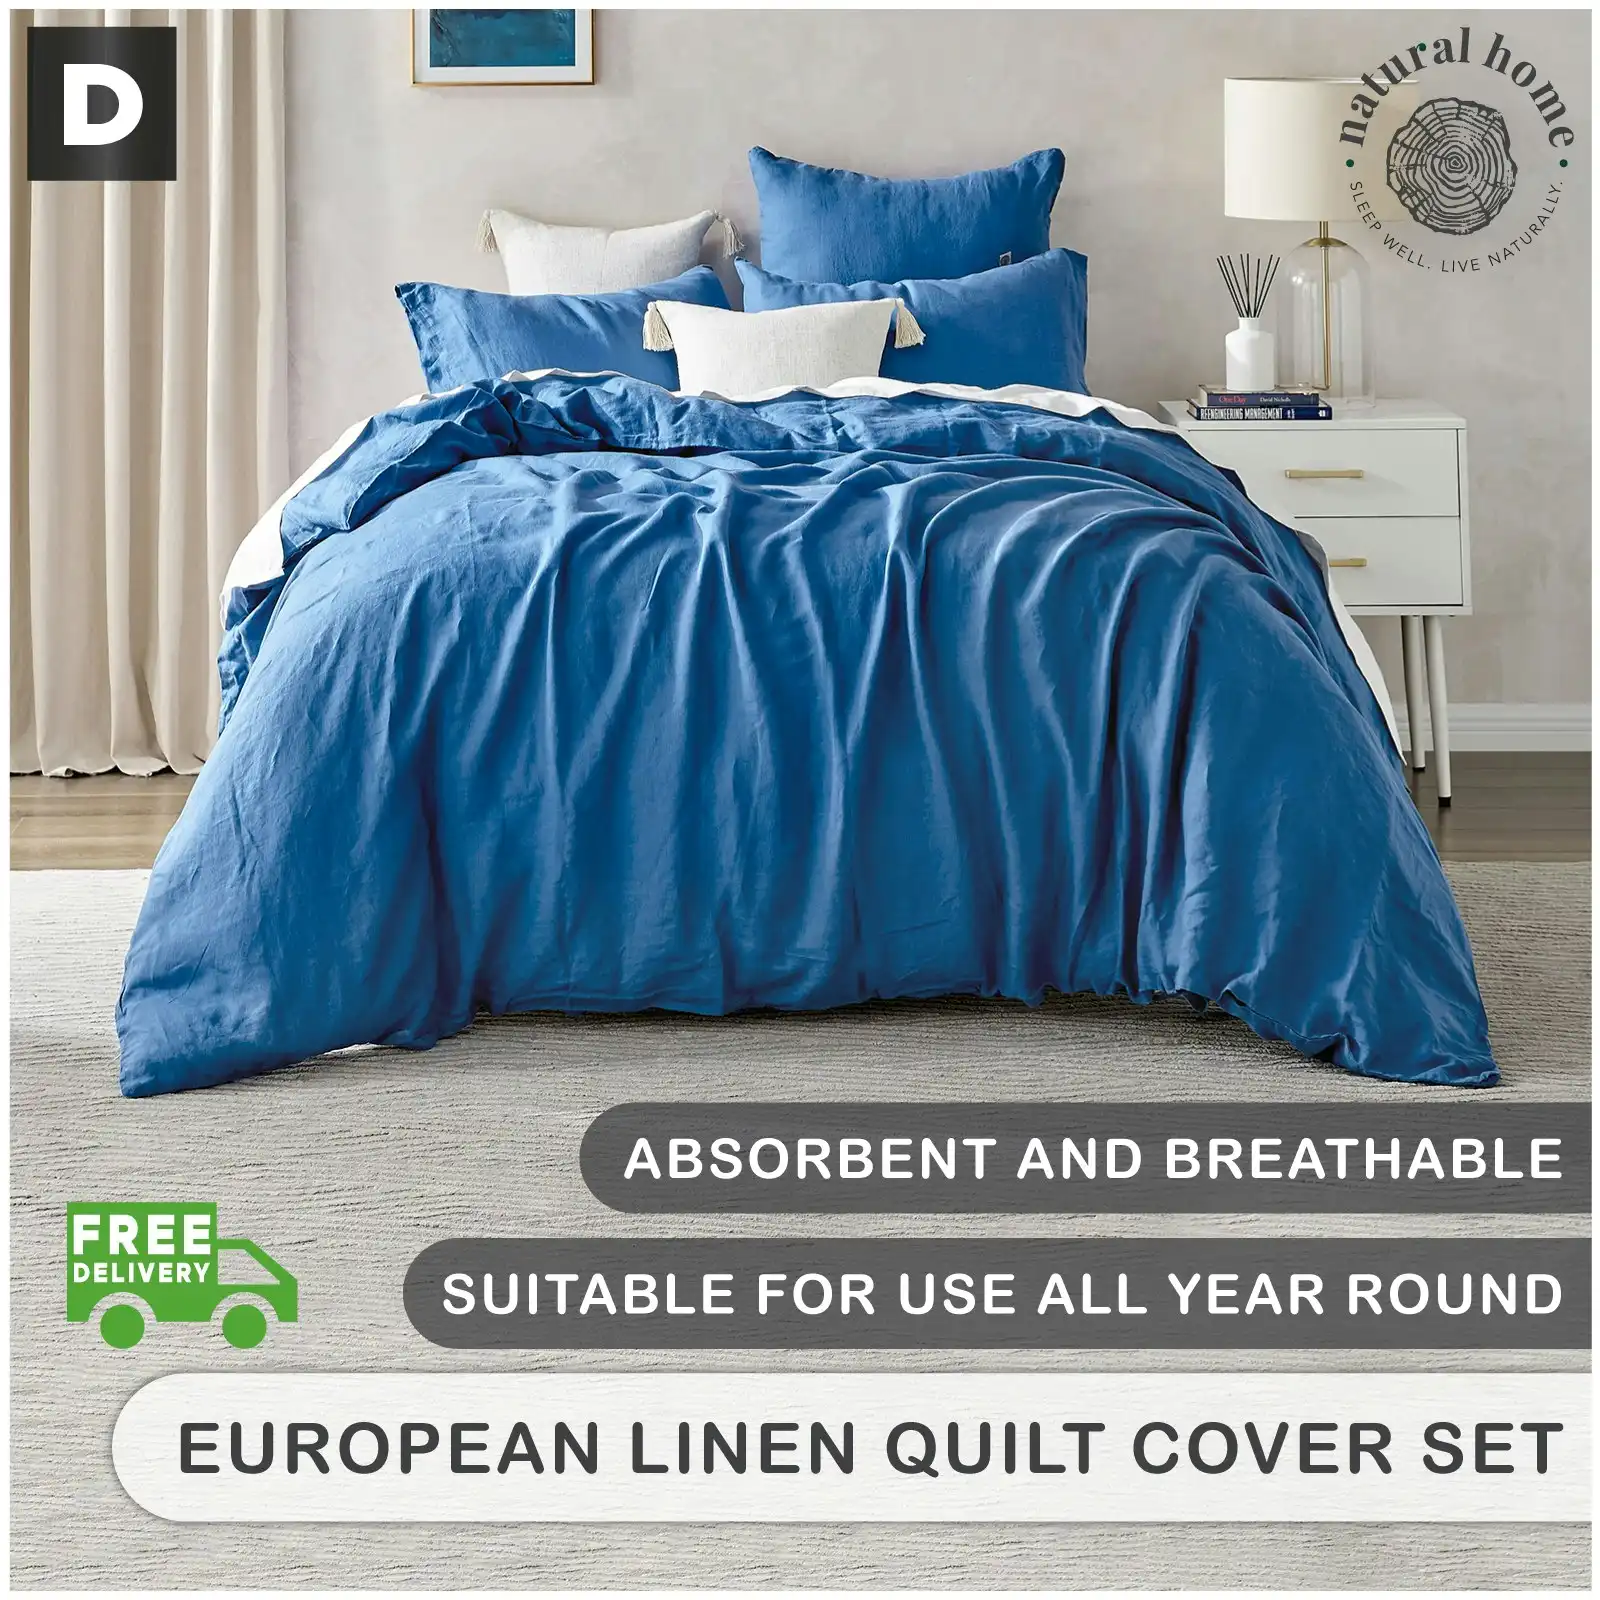 Natural Home Linen 100% European Flax Linen Quilt Cover Set - Deep Blue - Double Bed